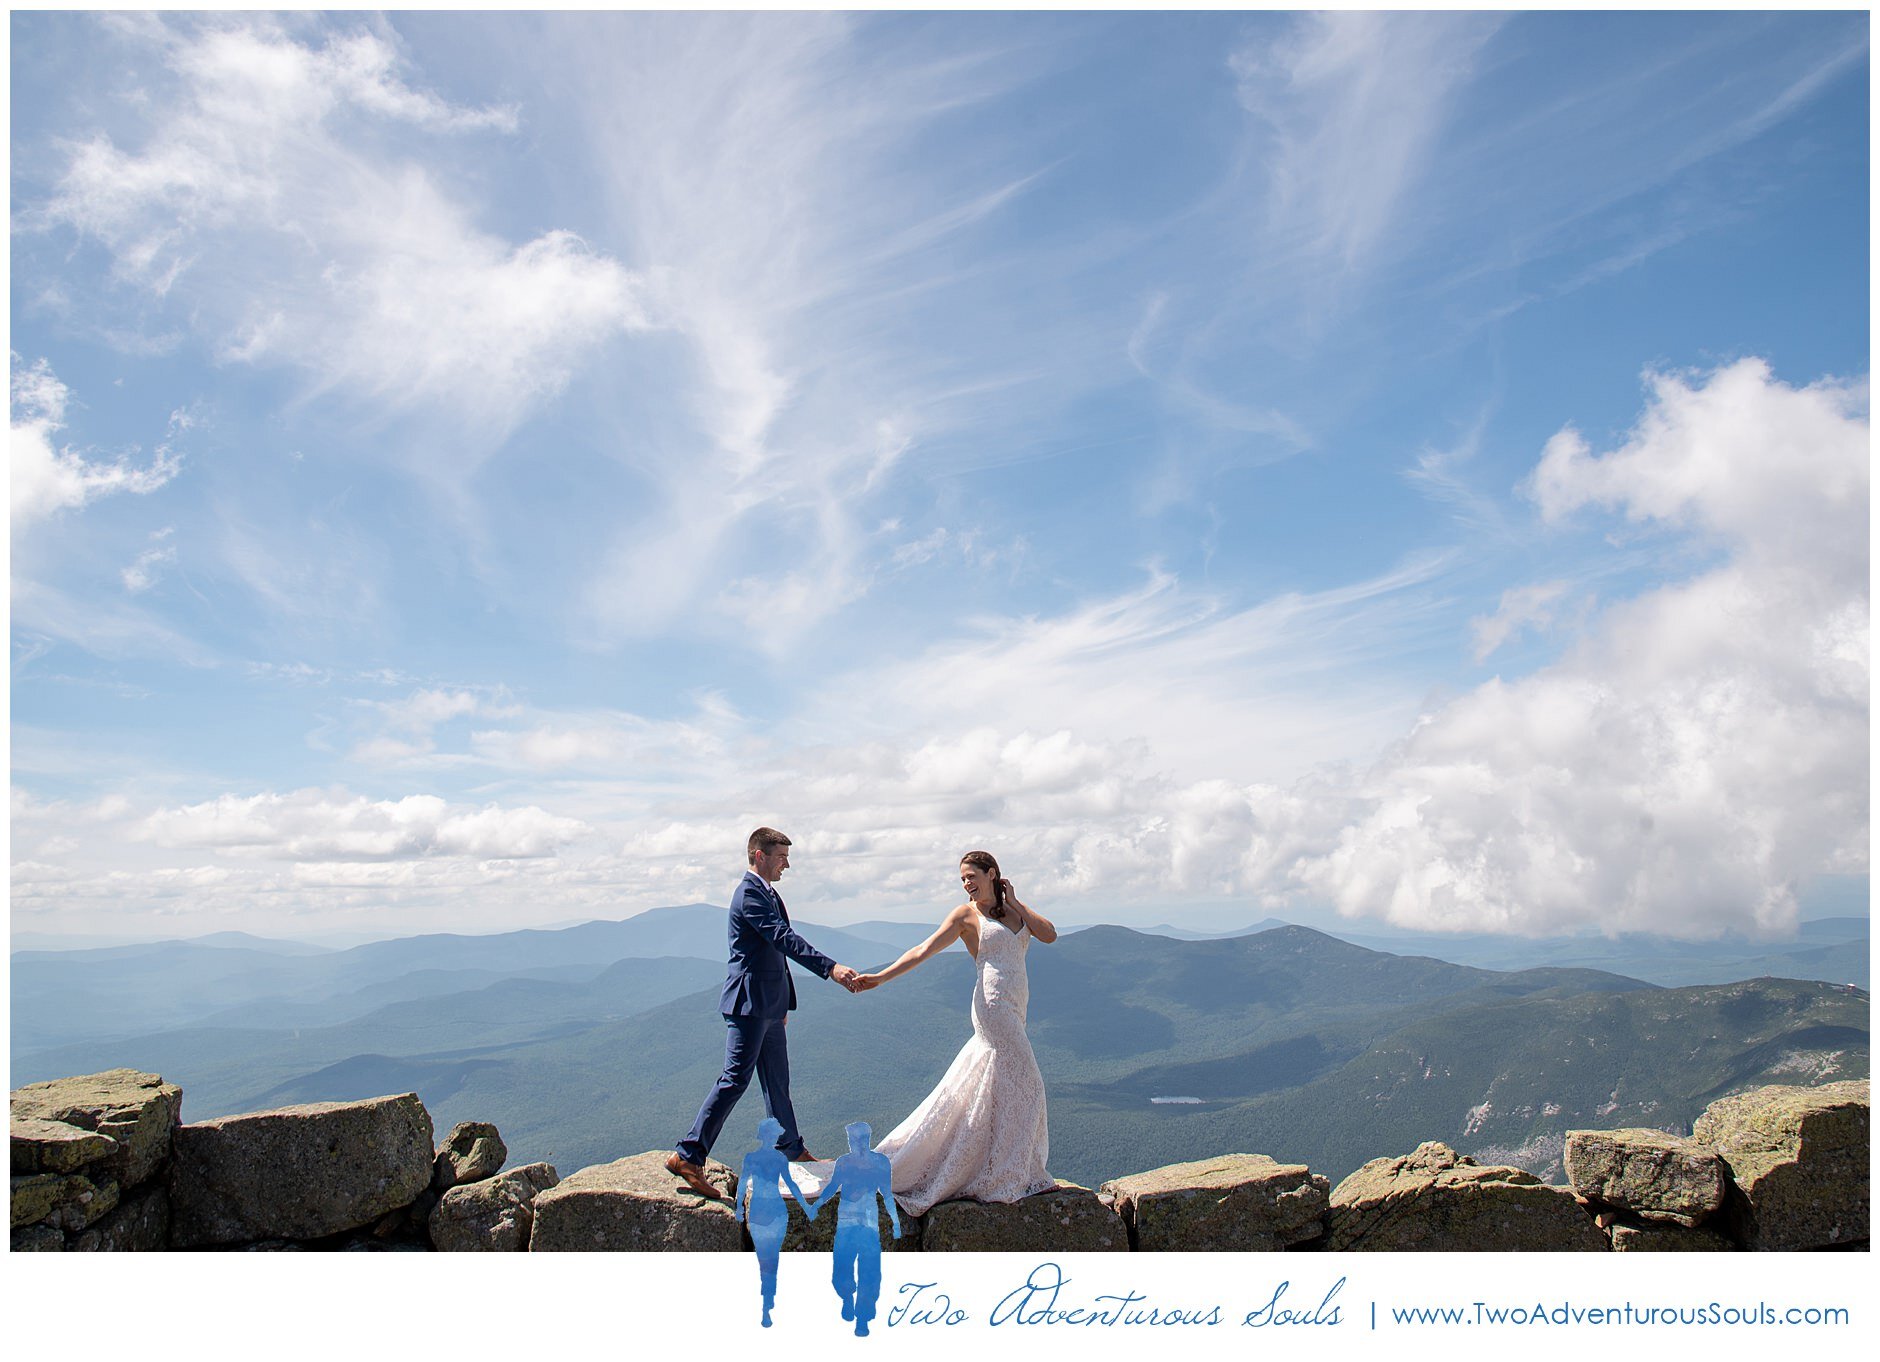 How to plan an adventure wedding, Adventure Wedding Photographers, Two Adventurous Souls - 040620_0002.jpg